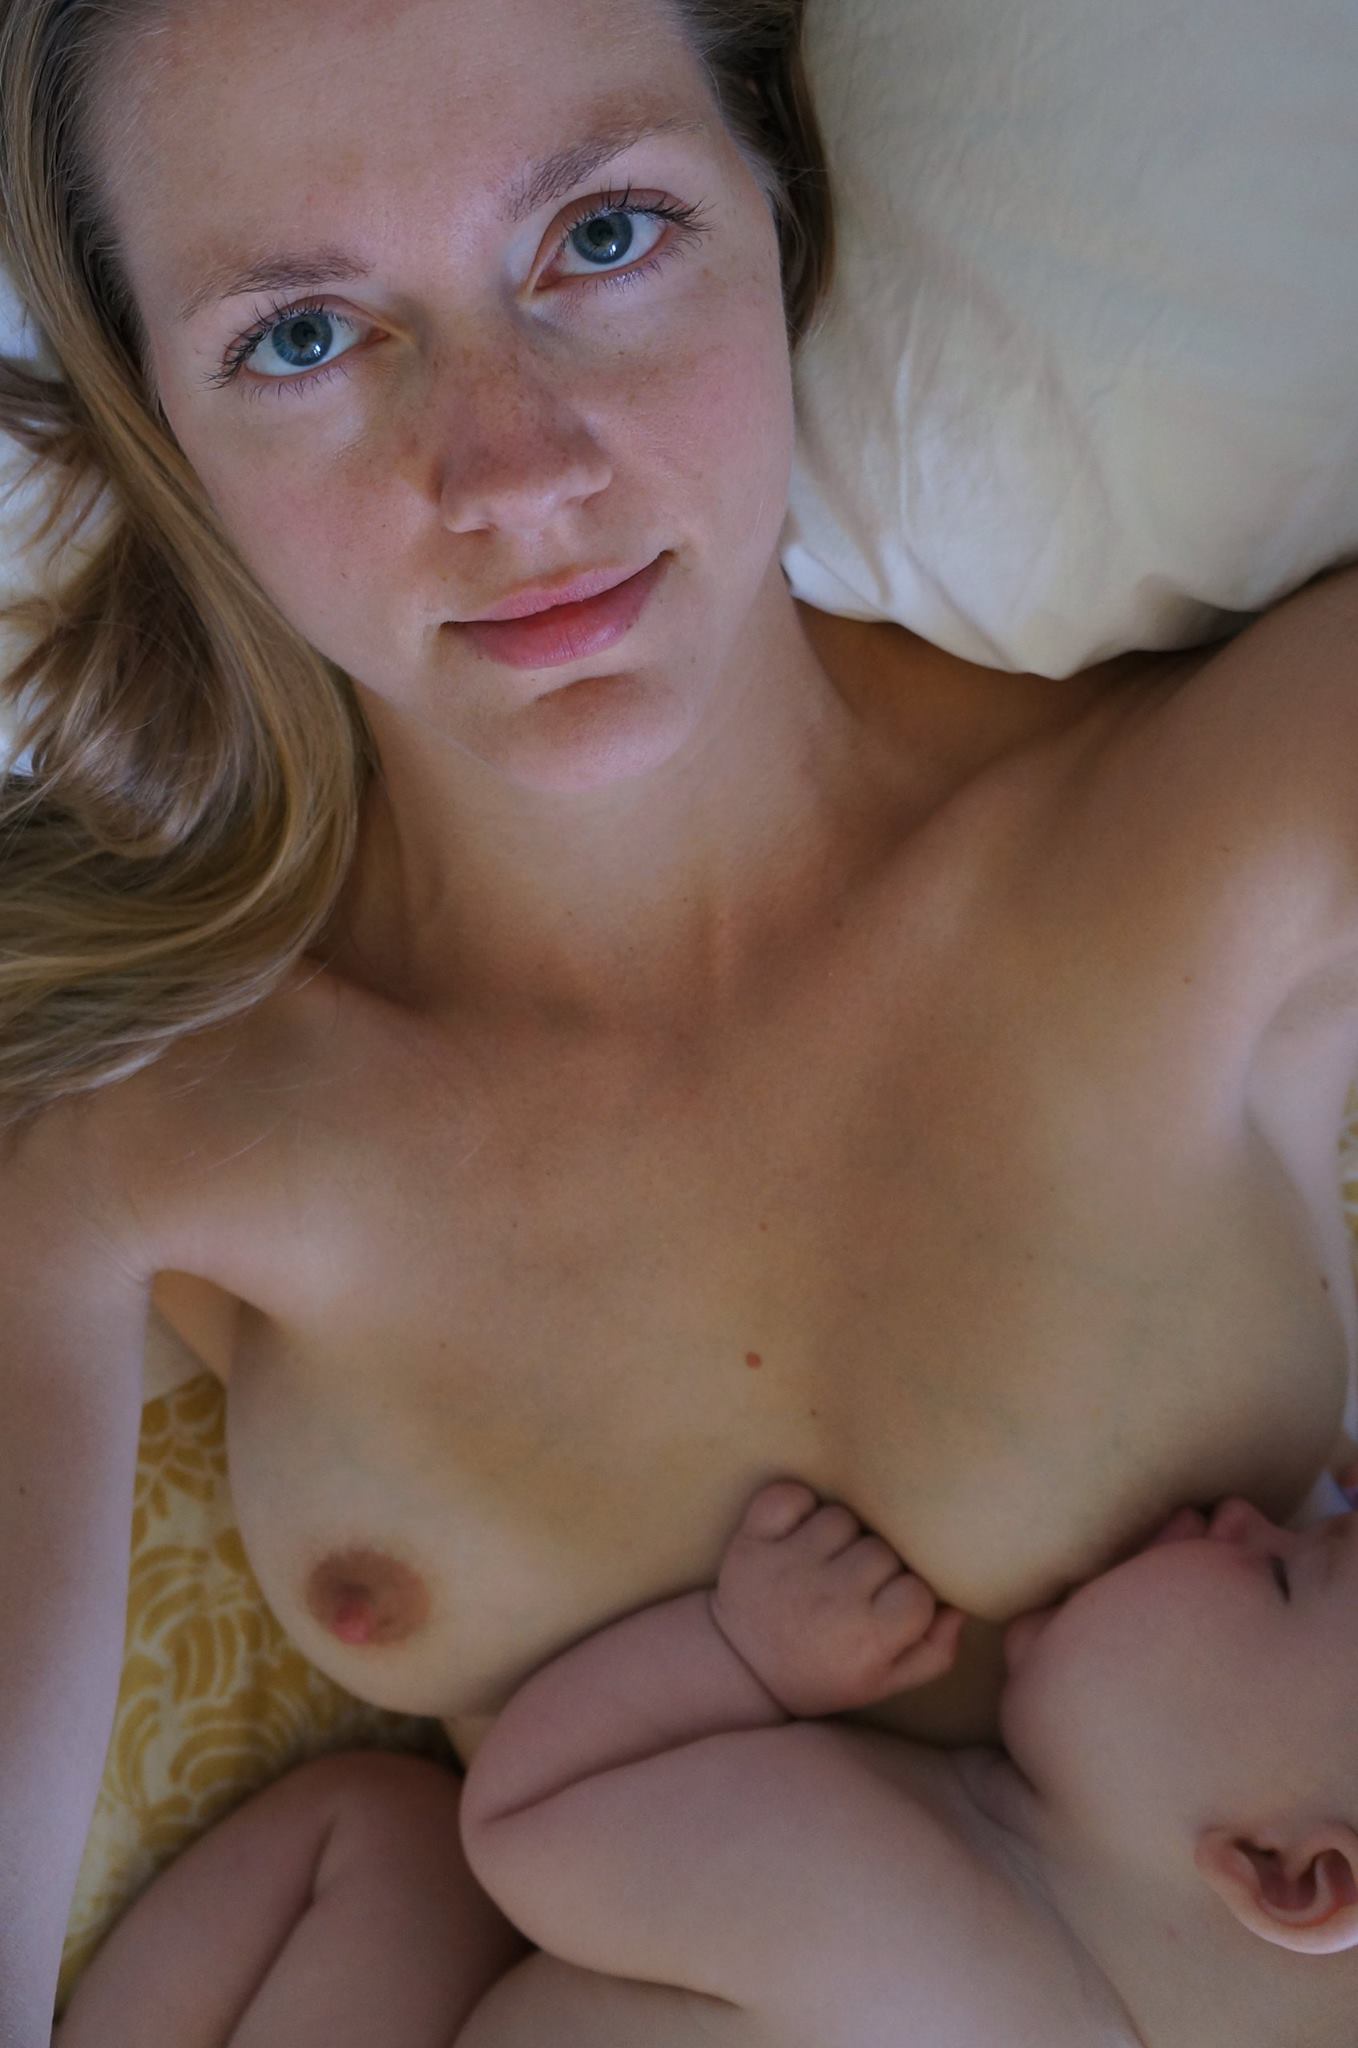 Nude Images Of Breastfeeding